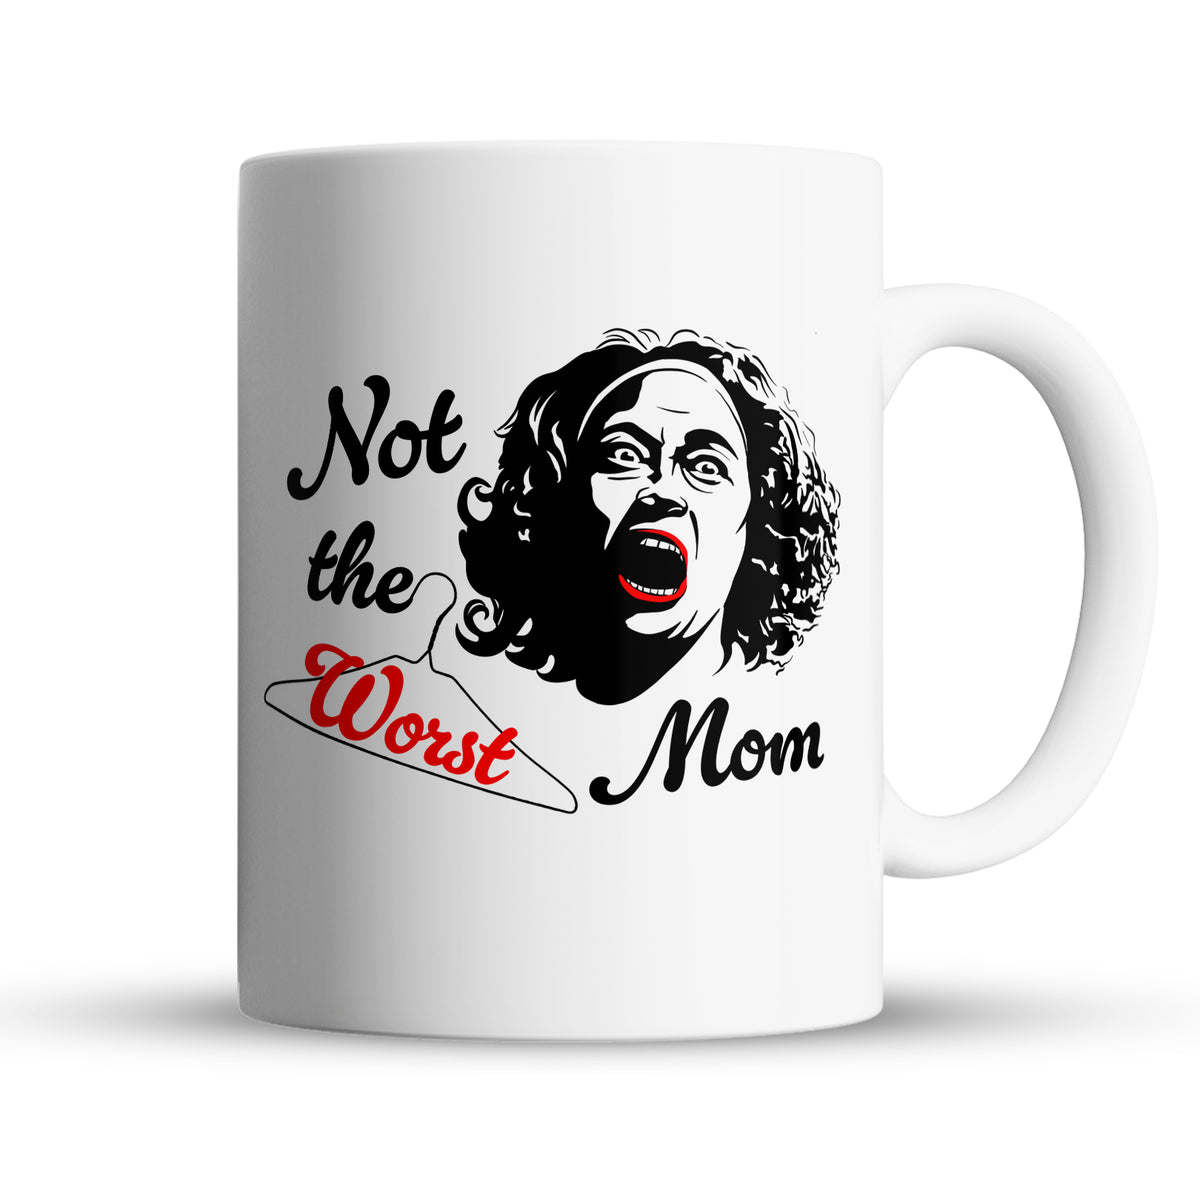 Mommie Dearest "Worst Mom” Large 15oz Mug - Funny Gift for Mom